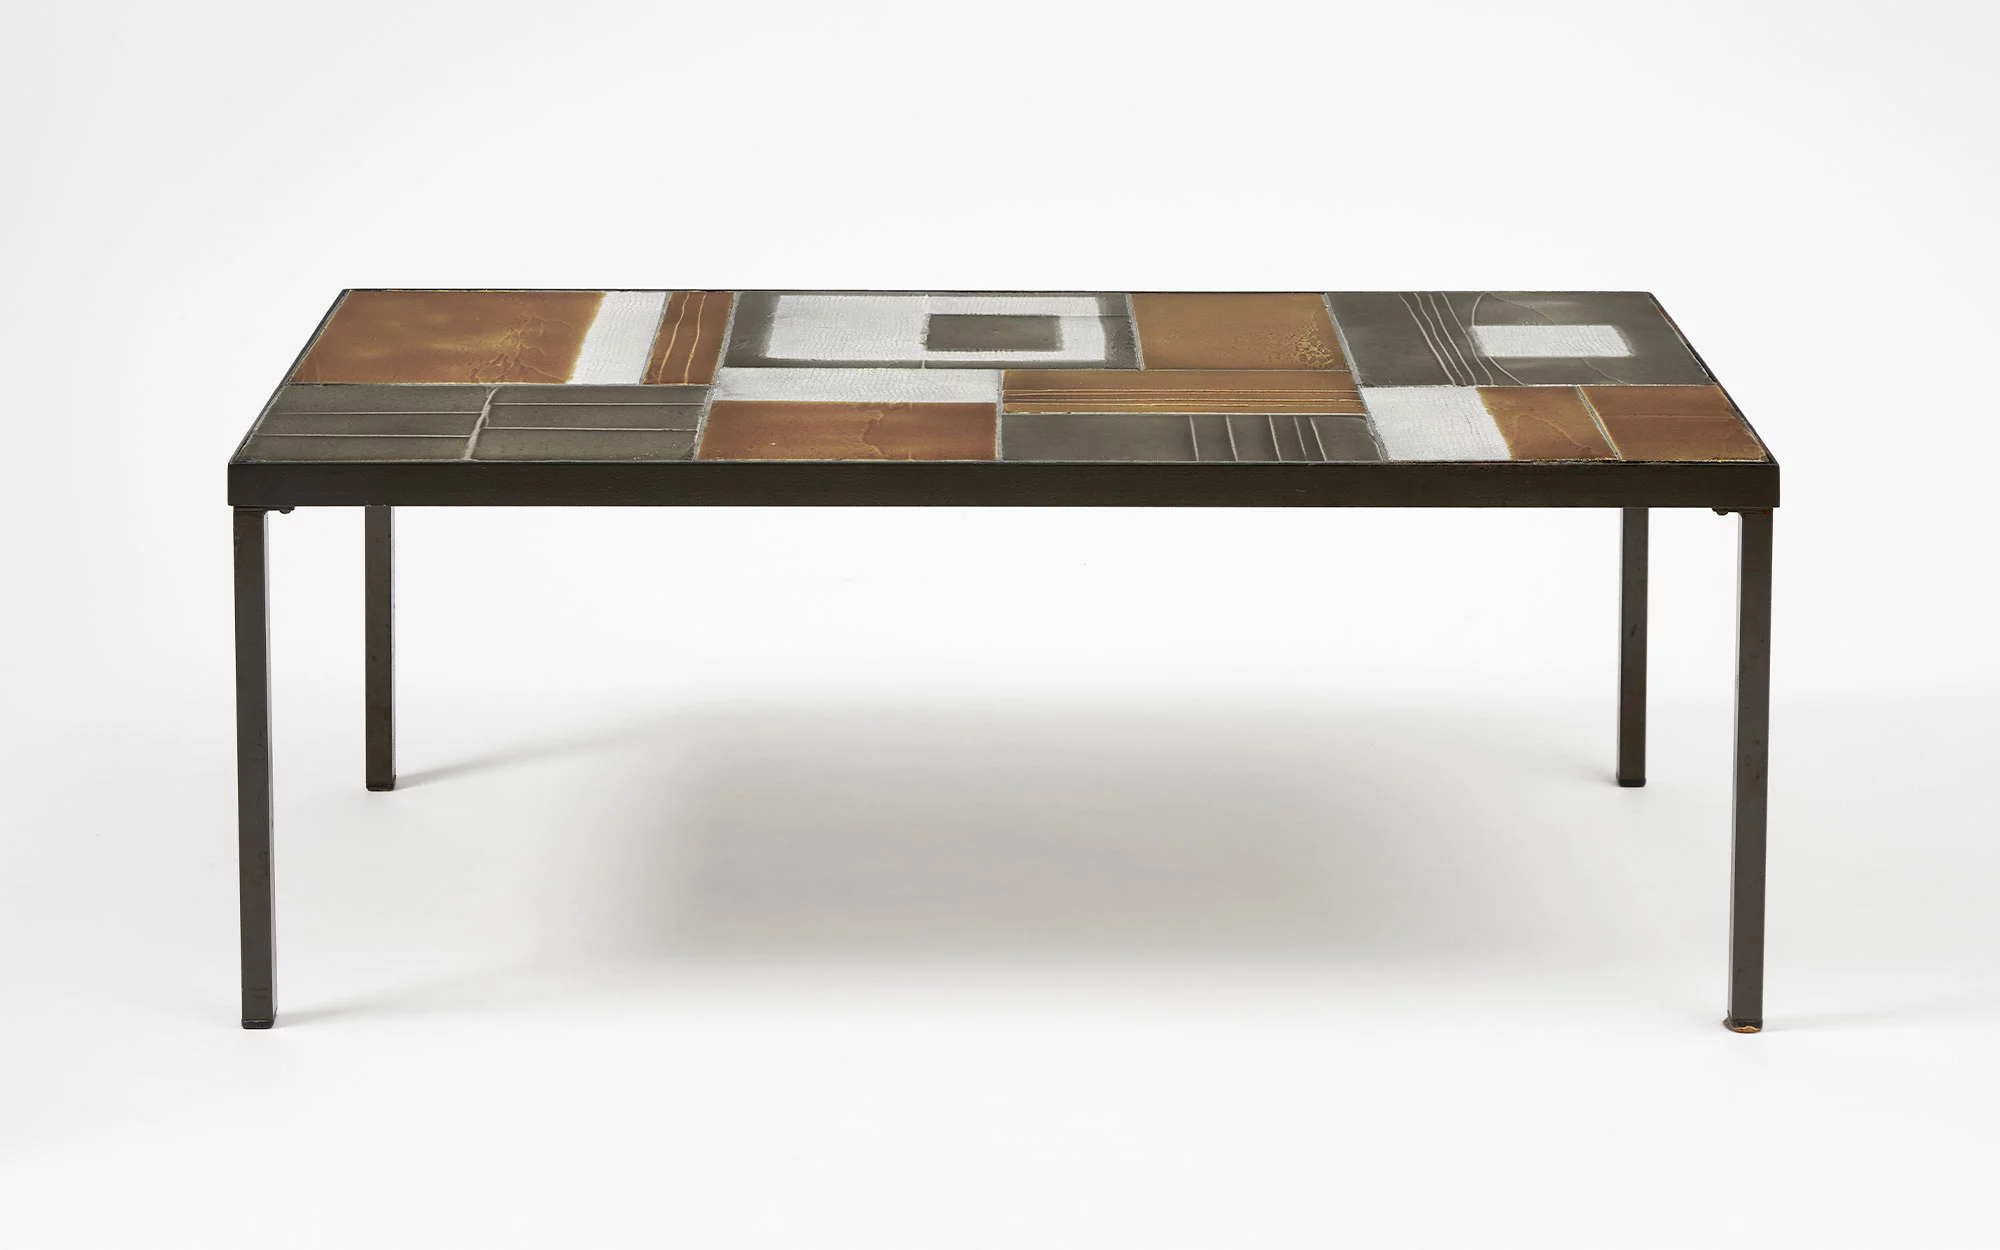 Geometrical - Roger Capron - Coffee table - Galerie kreo